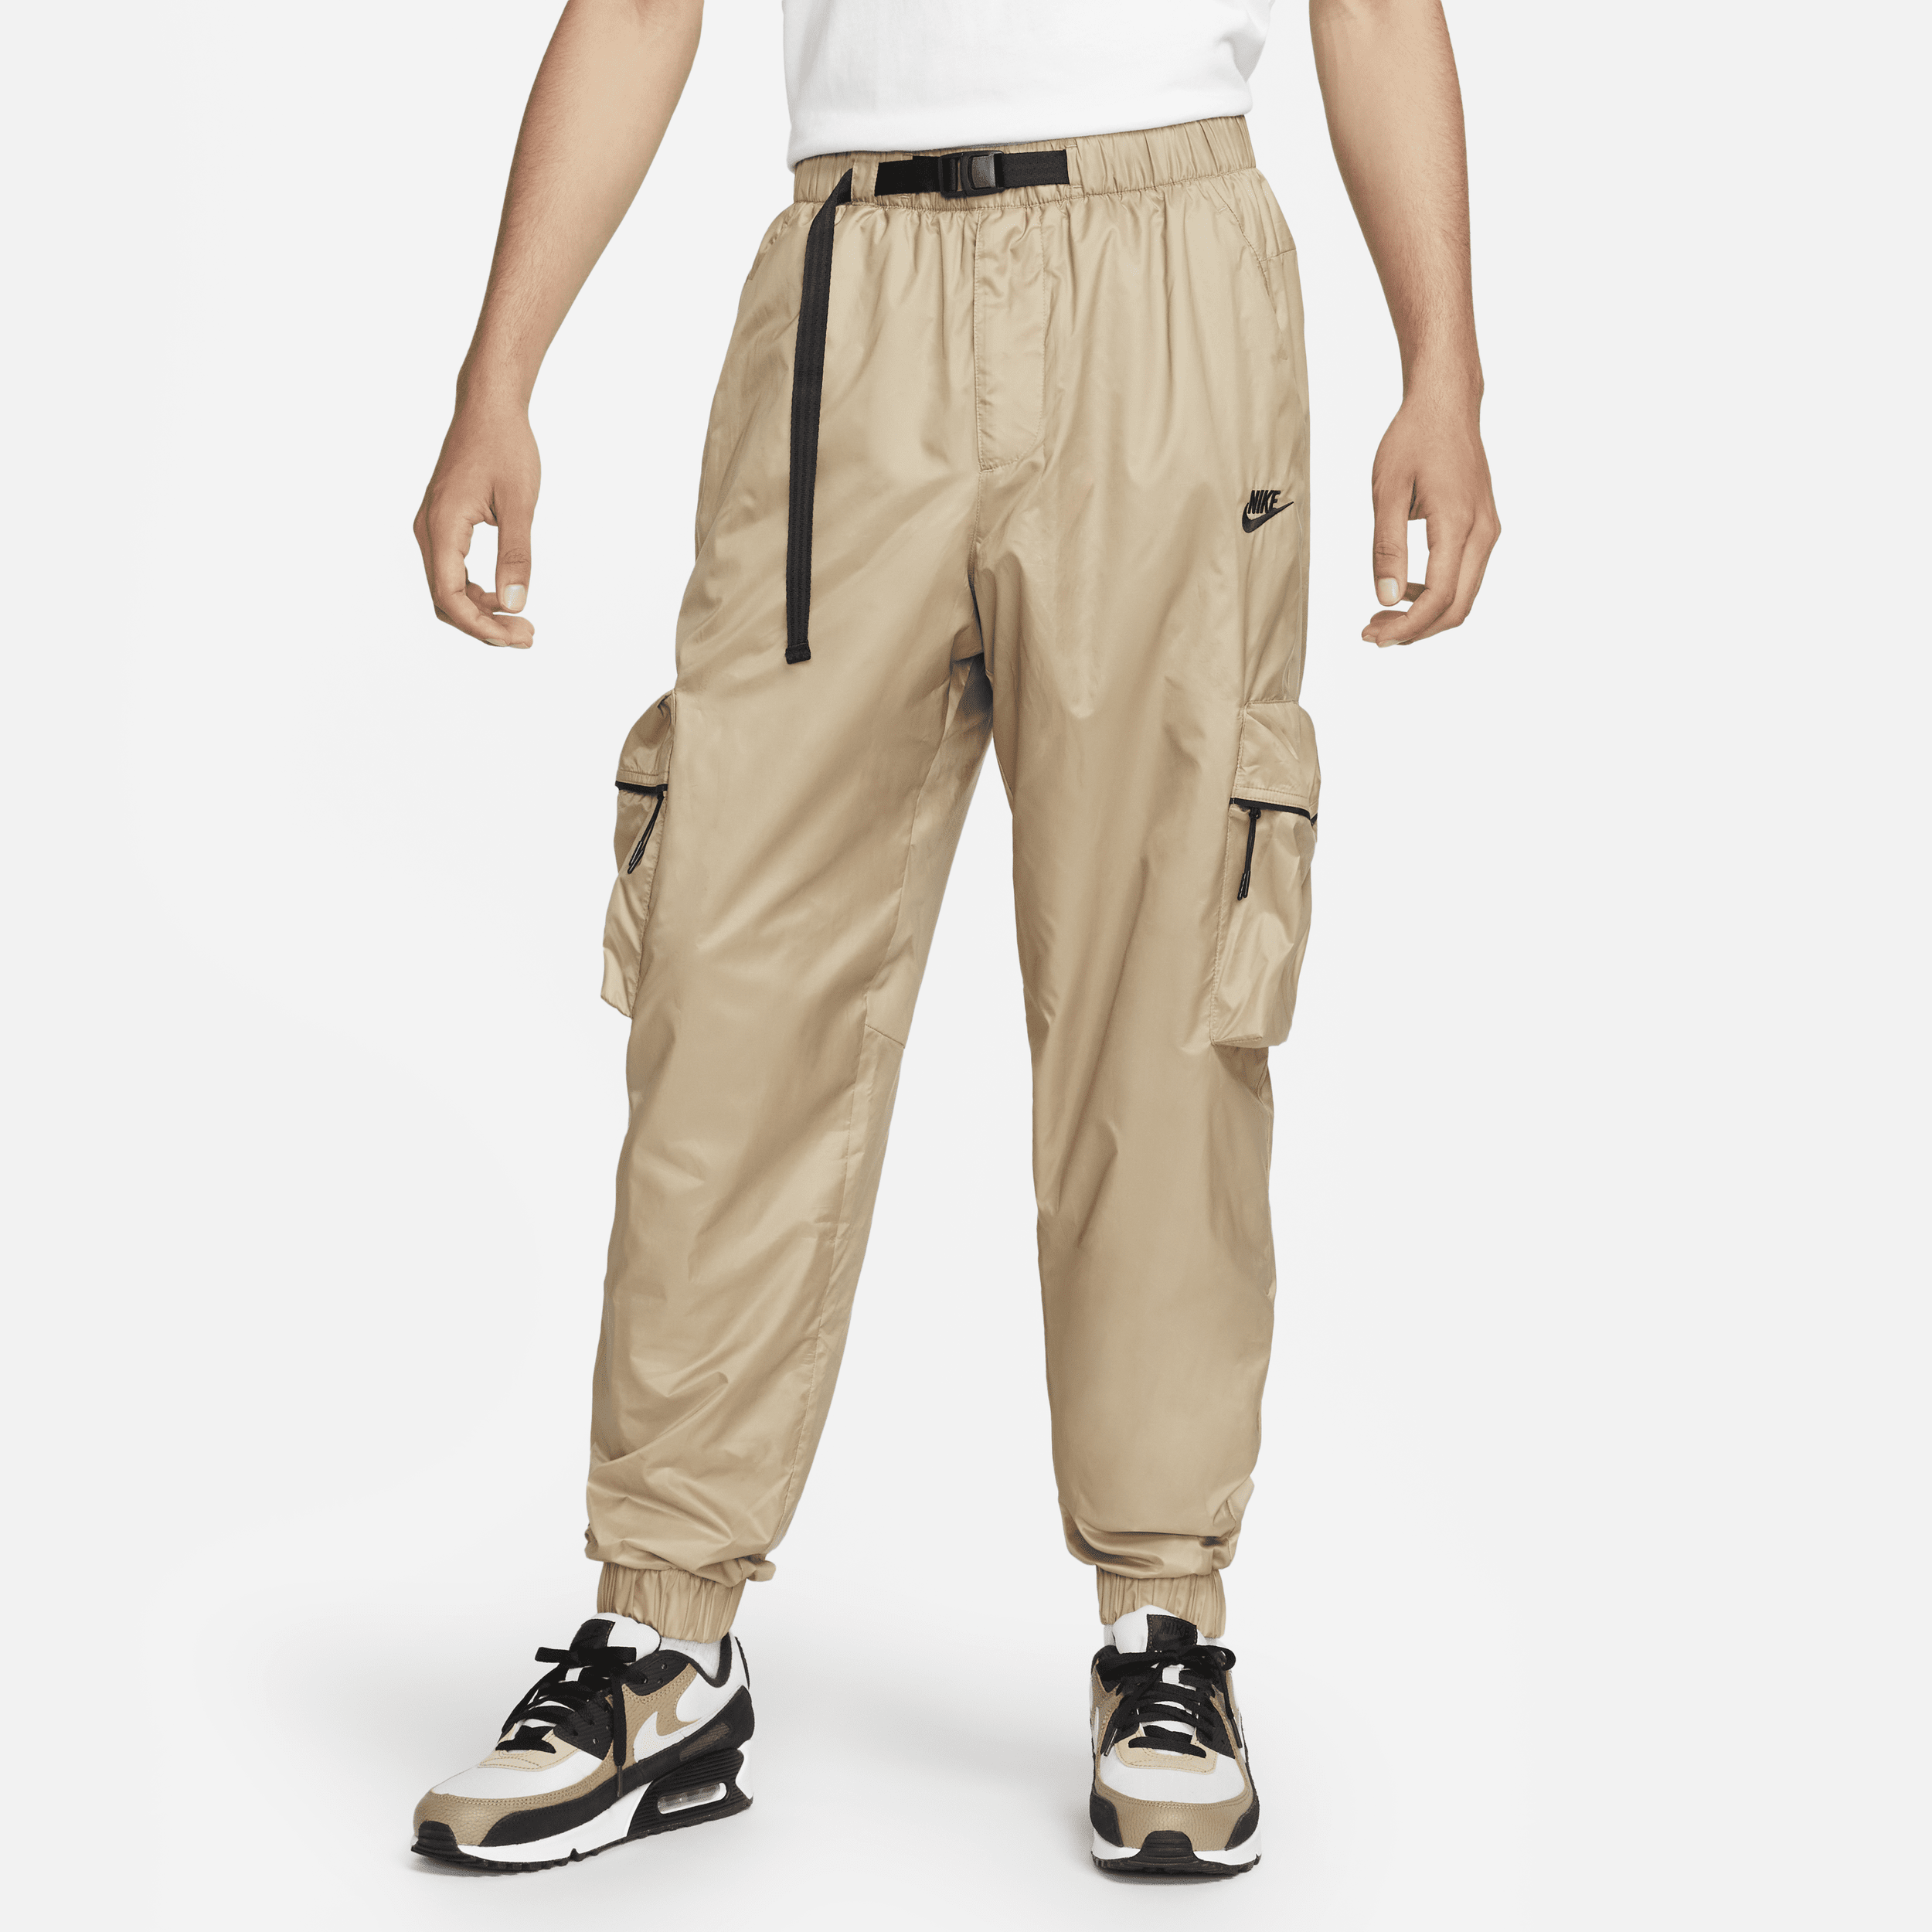 Pantaloni in tessuto con fodera Nike Tech – Uomo - Marrone